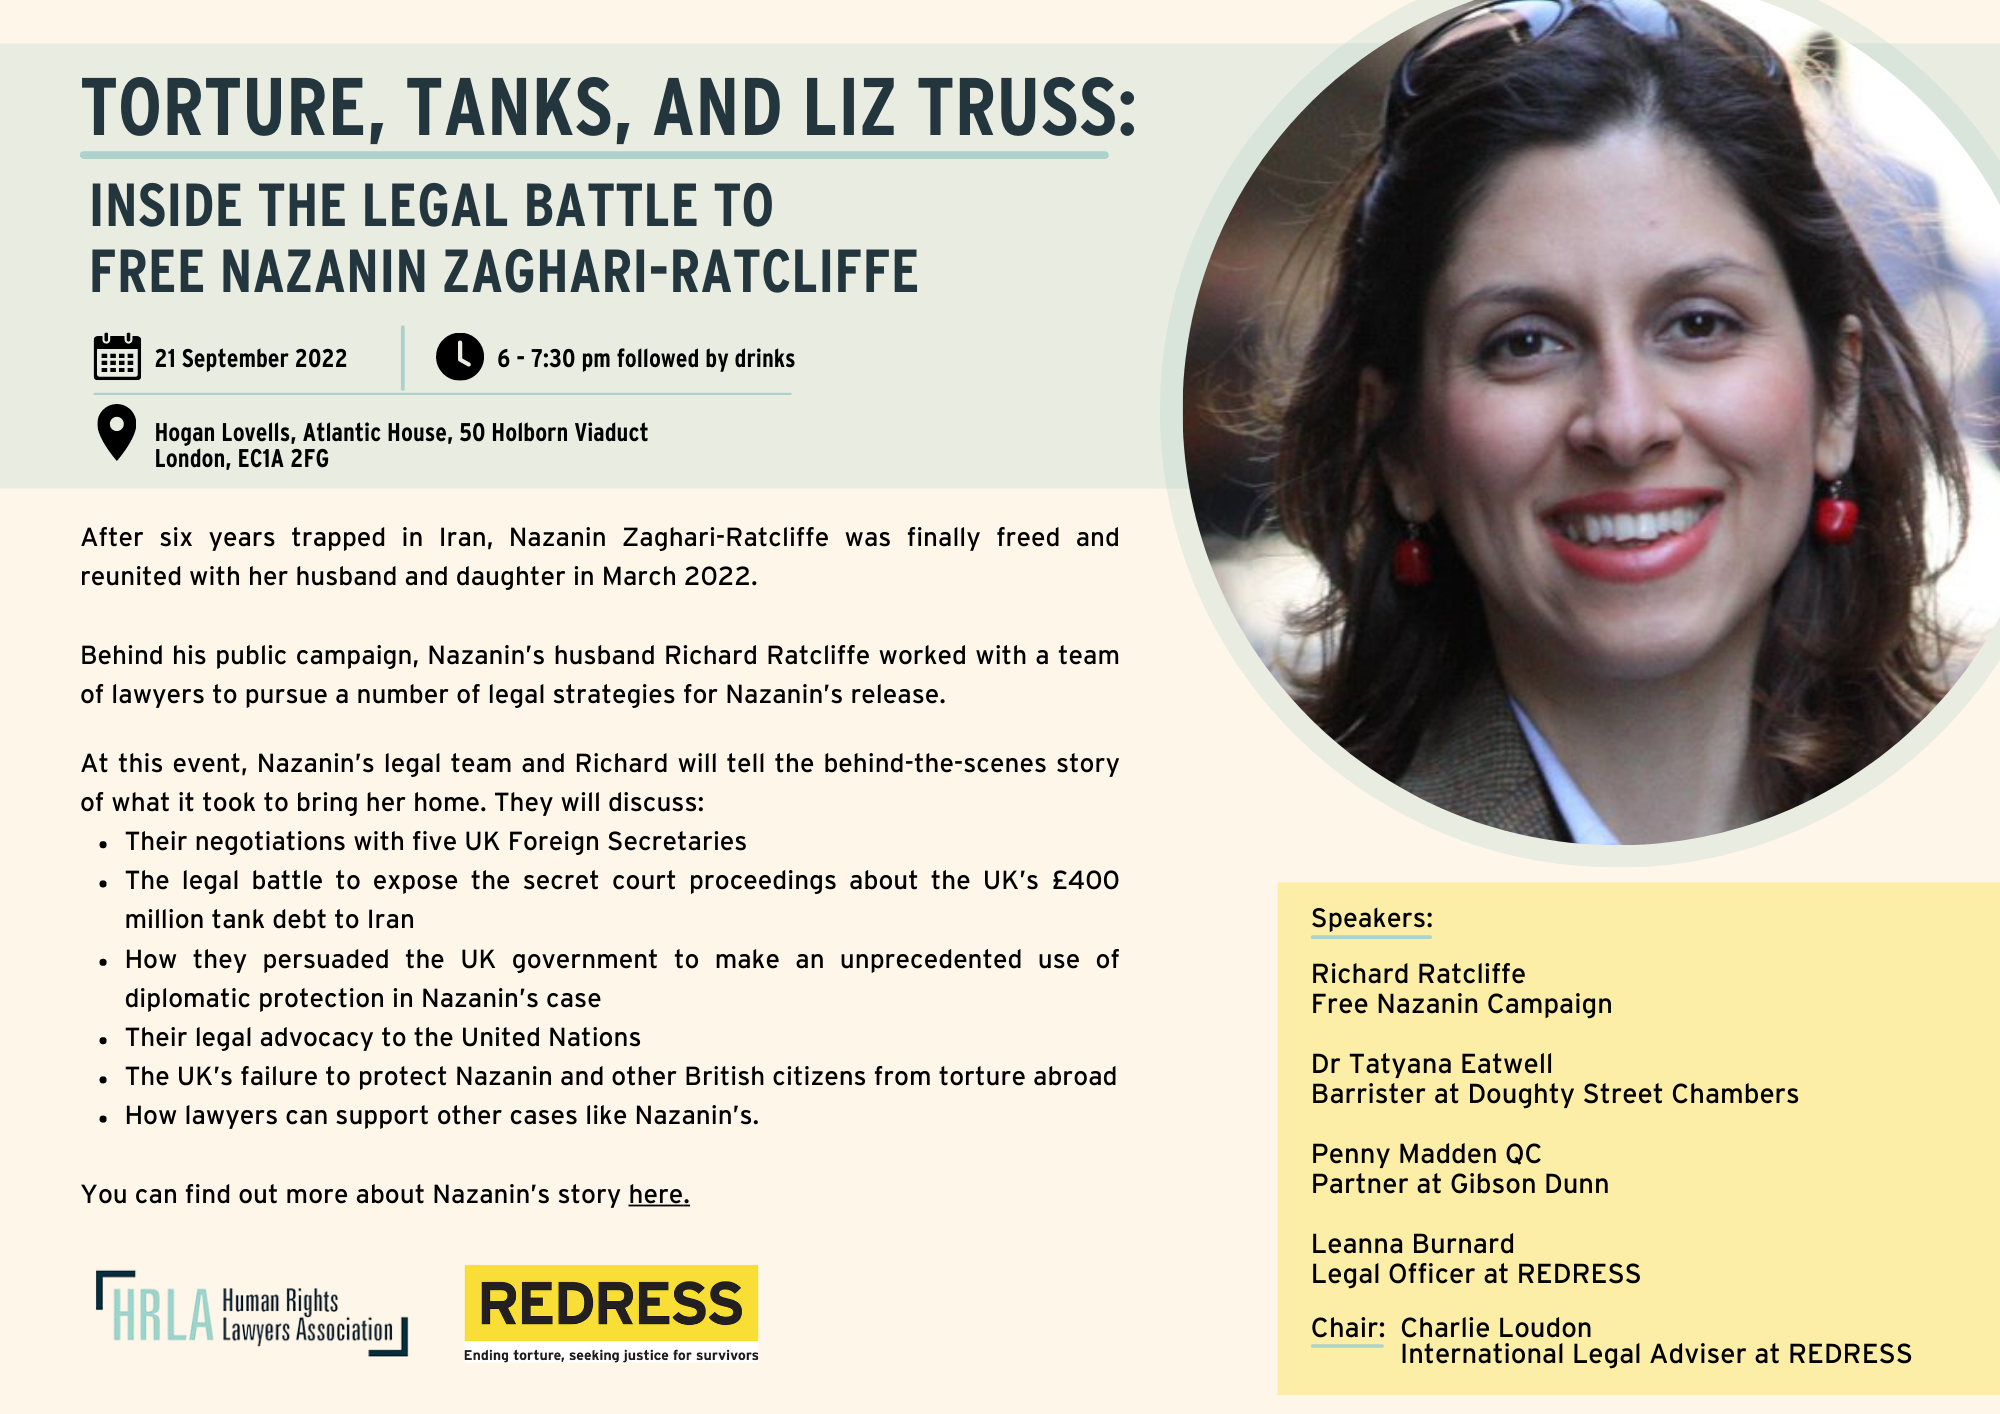 Event: Torture, Tanks, and Liz Truss: Inside the Legal Battle to Free Nazanin Zaghari-Ratcliffe